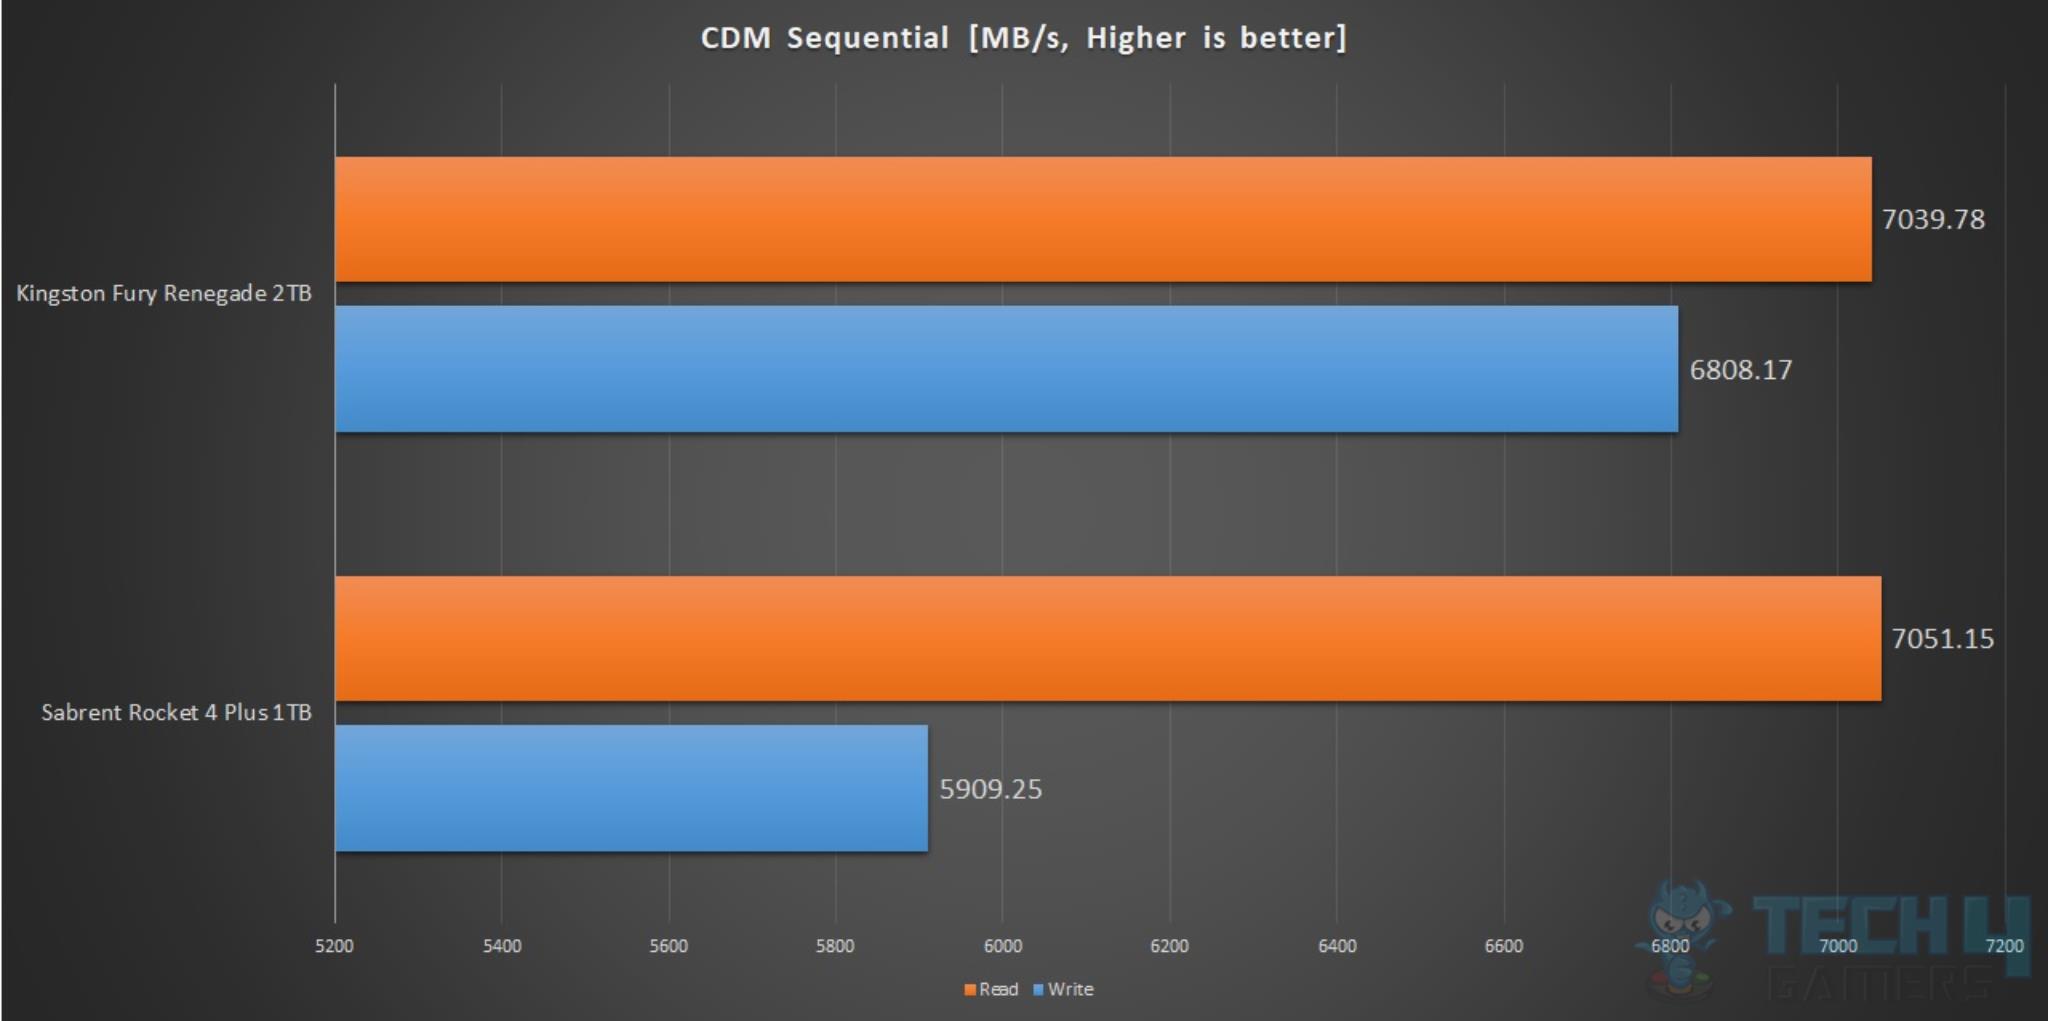 Kingston Fury Renegade 2TB NVMe SSD — CDM Sequential Speeds